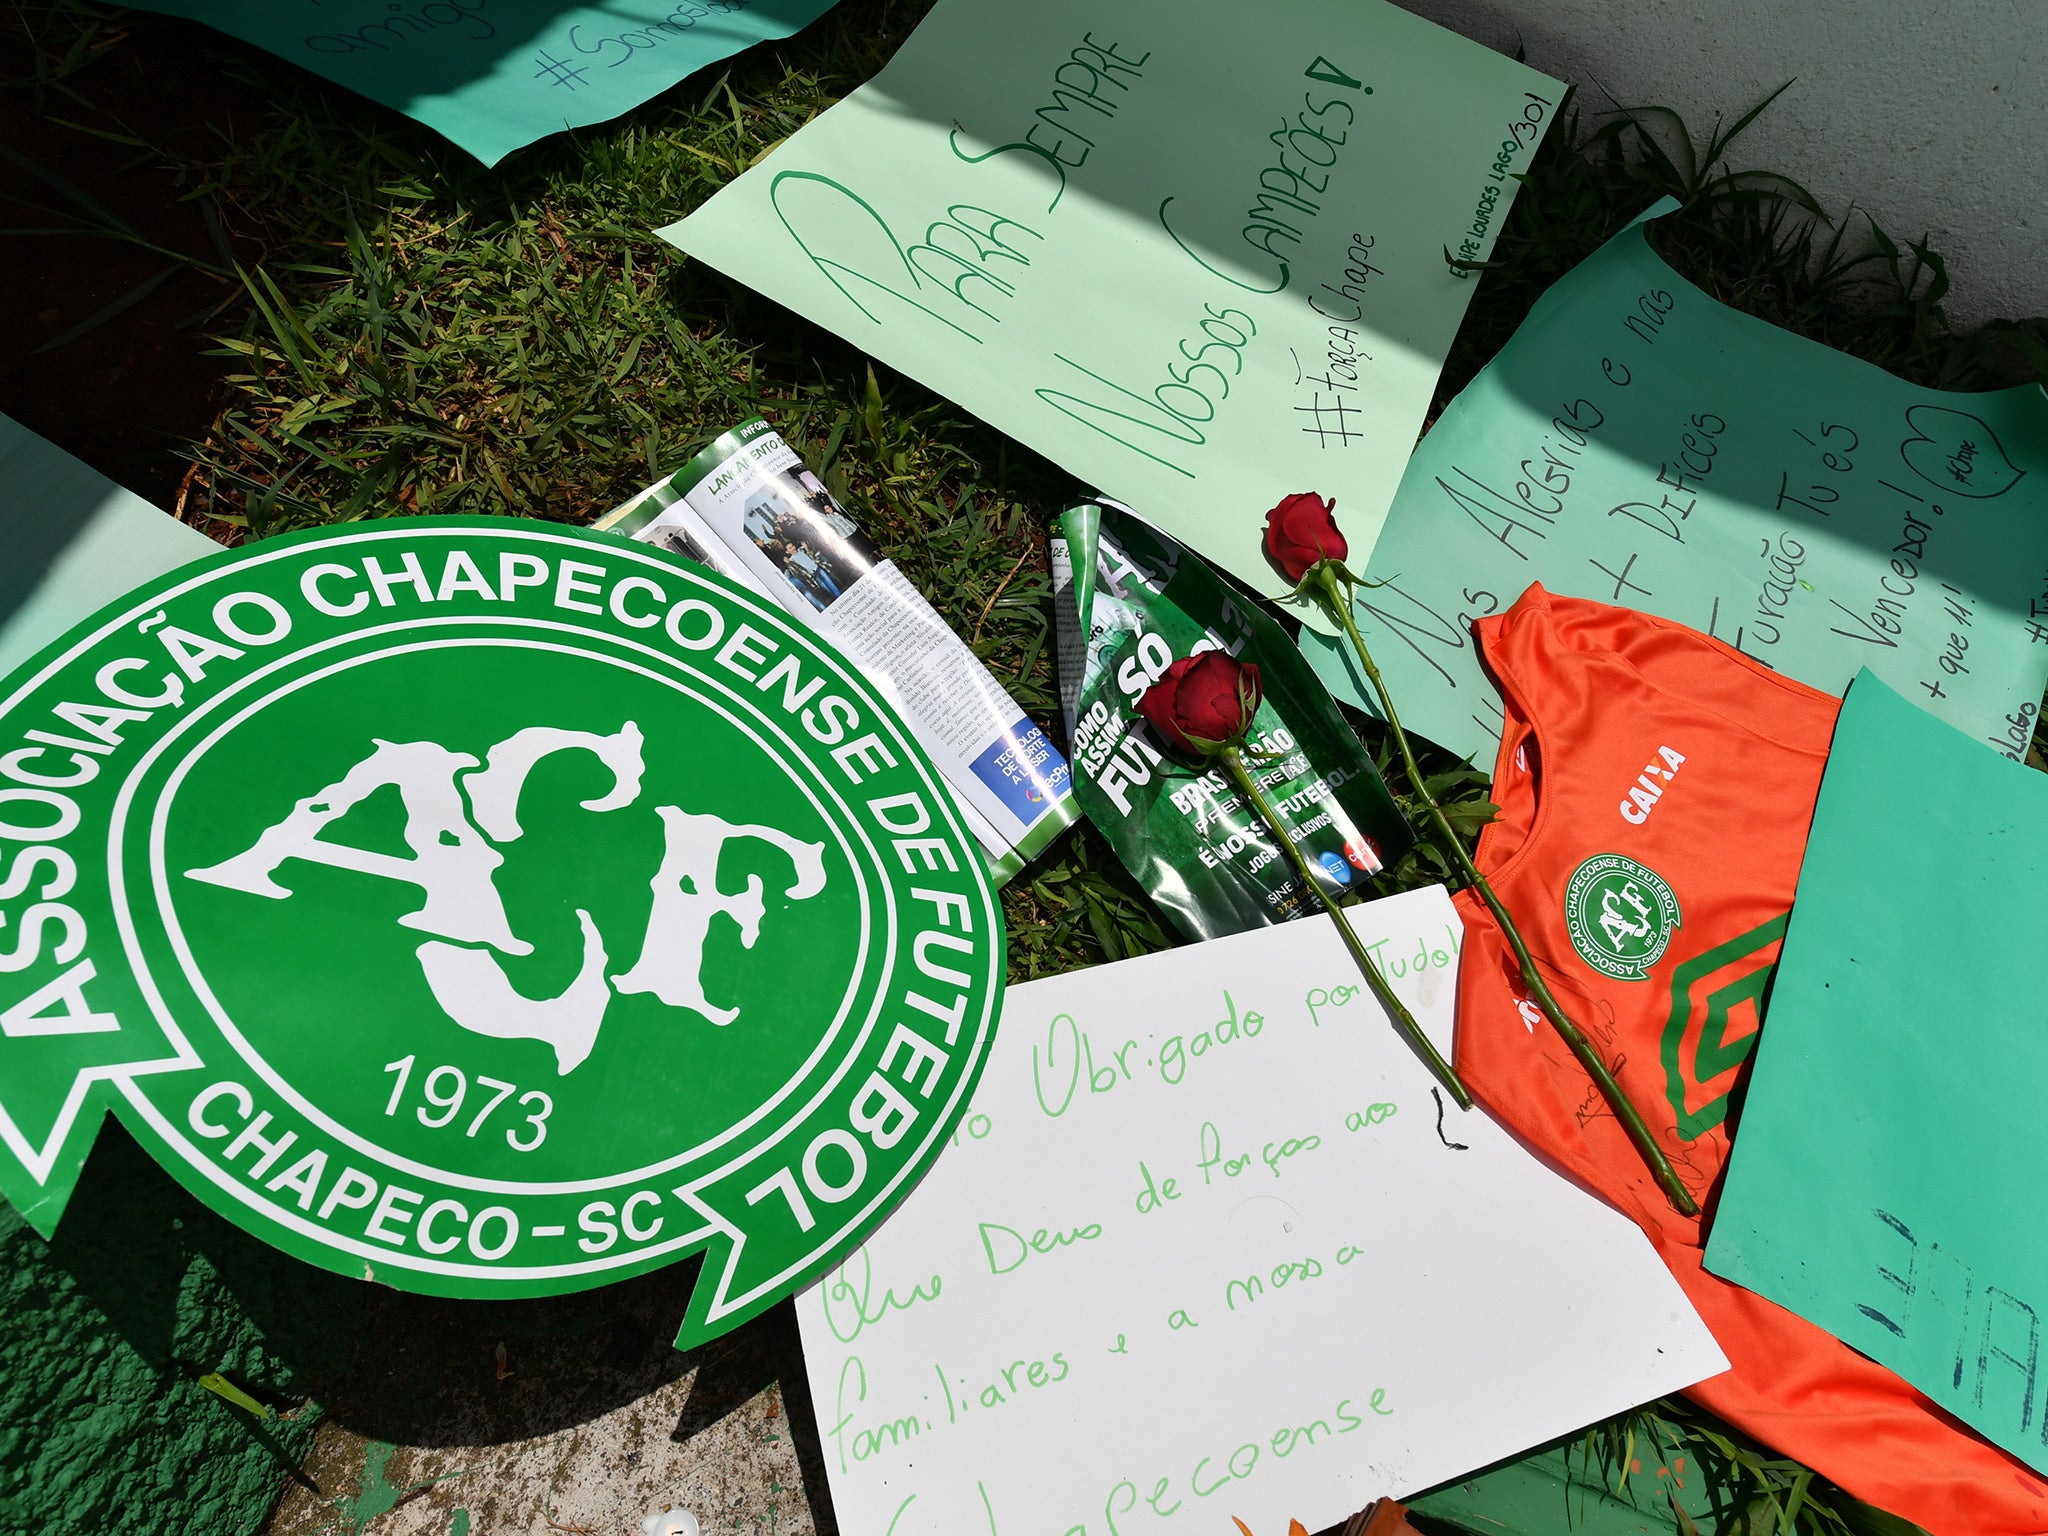 The world of football rallied around Chapecoense after last November's crash